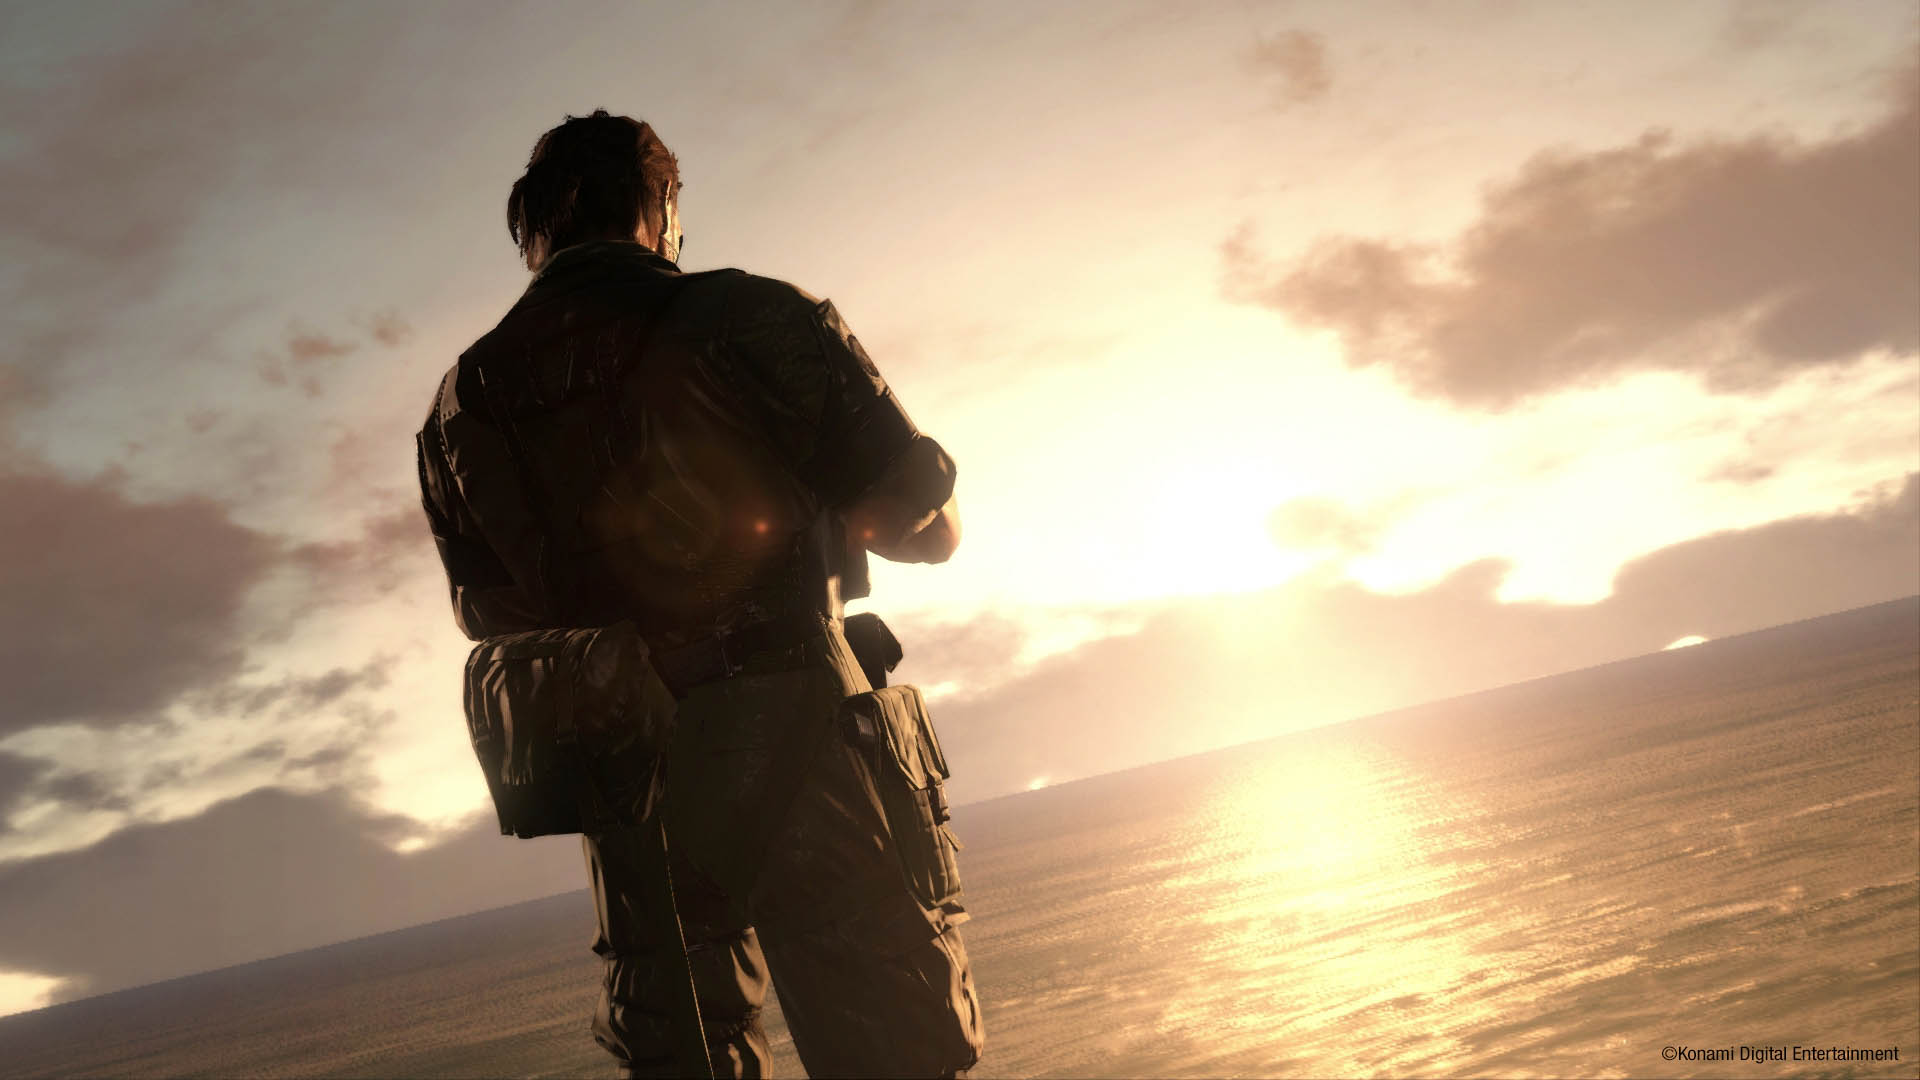 Big Boss at Sunrise - Metal Gear Solid V The Phantom Pain